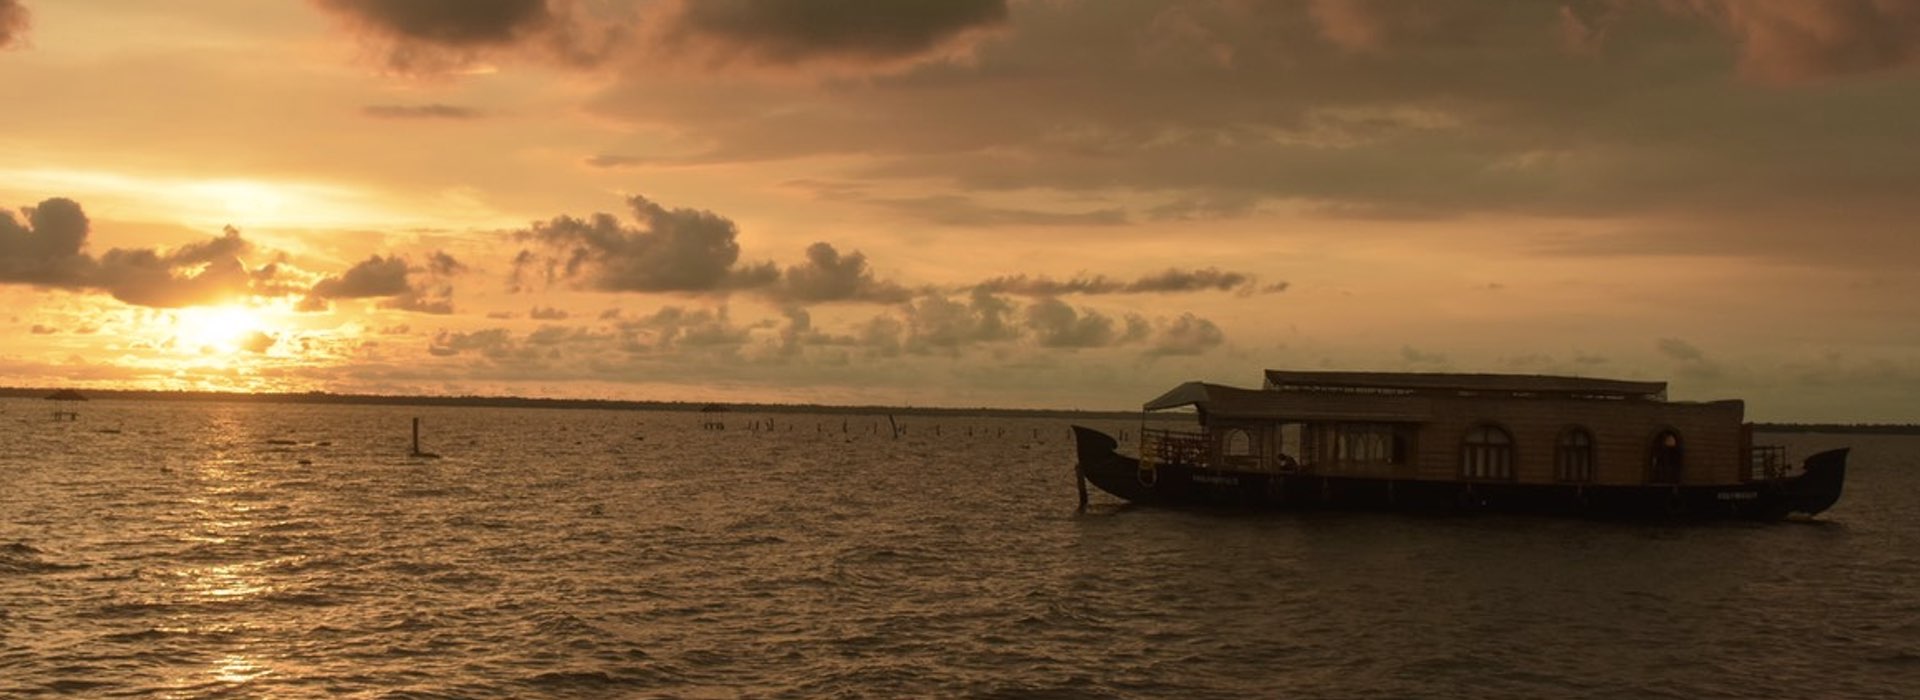 Kumarakom Houseboat - Kerala - India